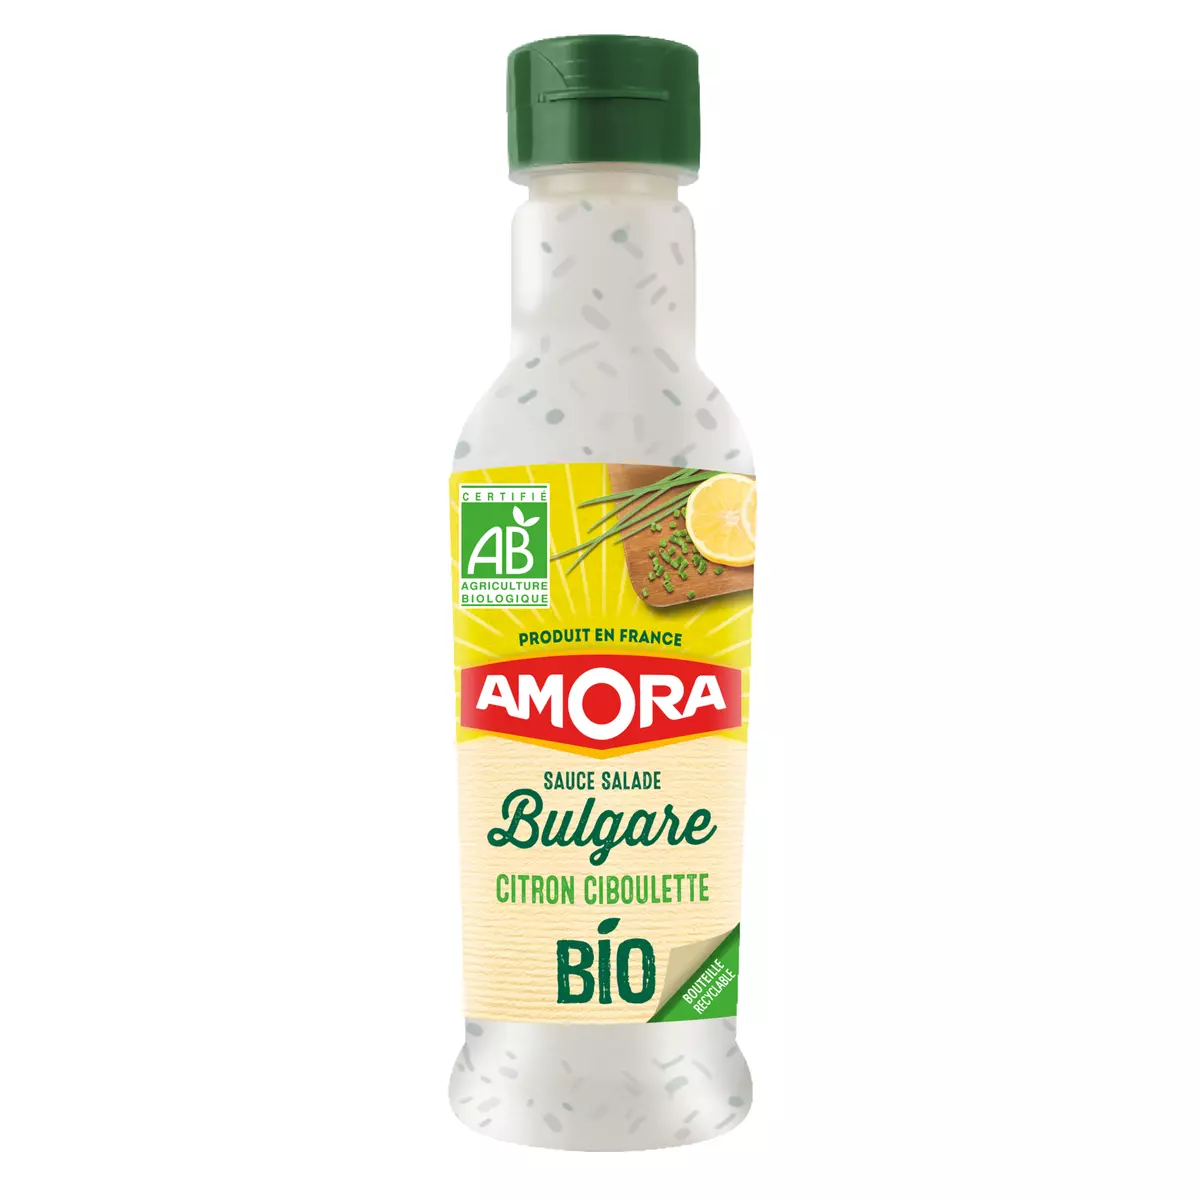 AMORA Sauce salade bulgare bio citron ciboulette produit en France 200ml